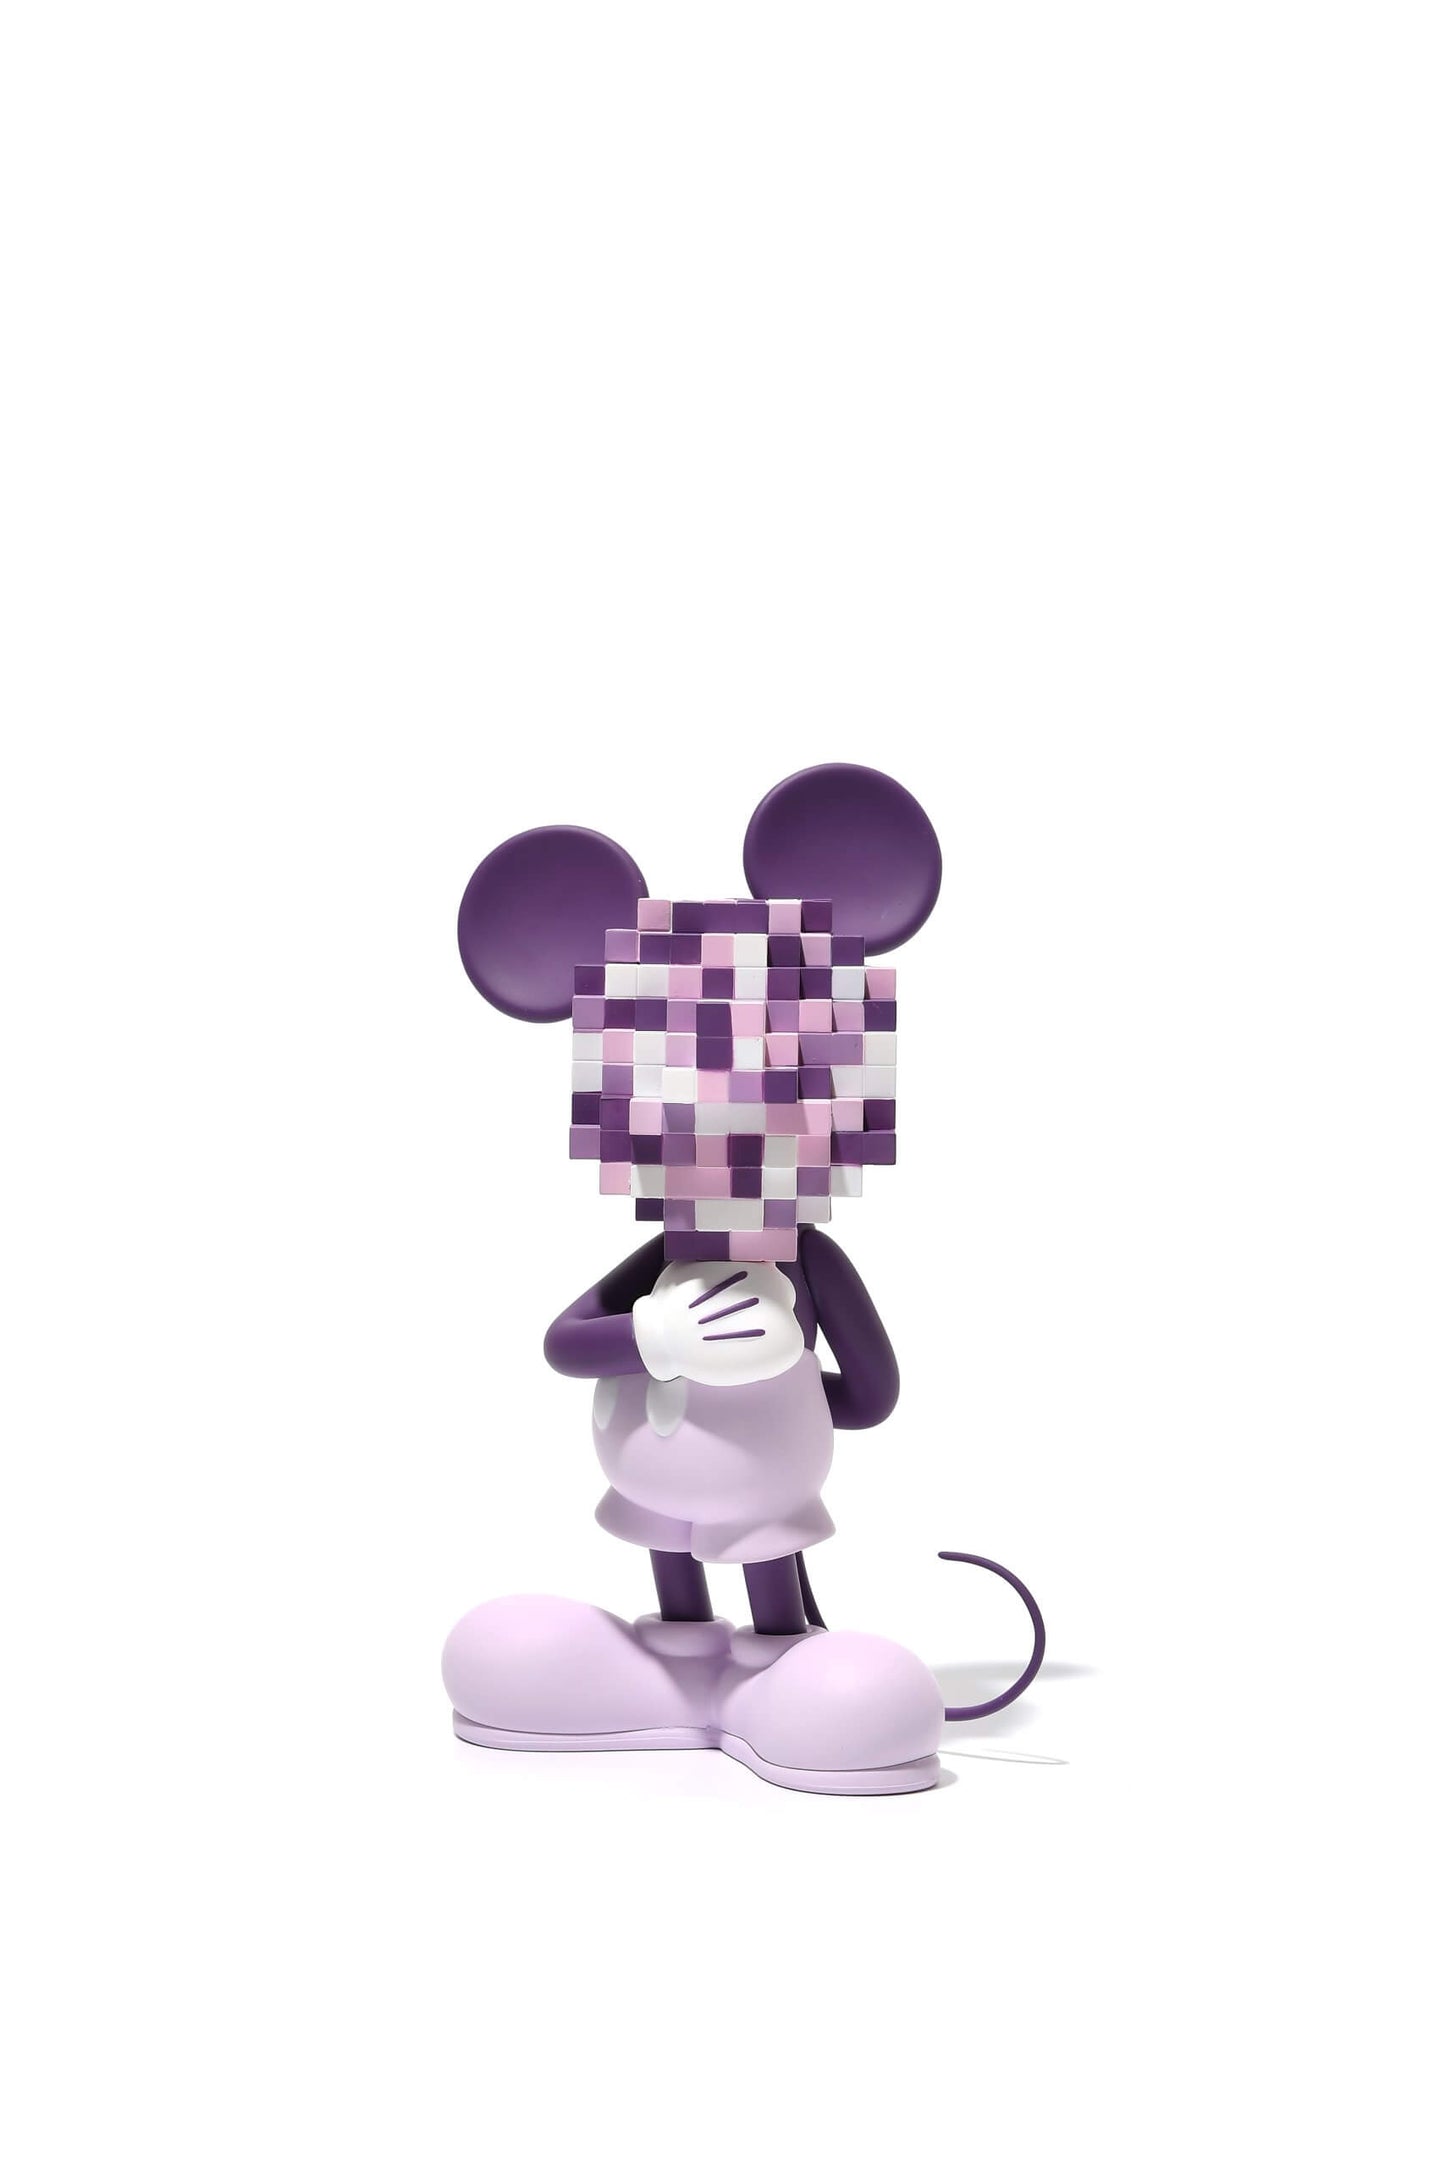 迷你版本 Mickey Mouse (mosaic art style) (紫色) (15cm Tall) 亞州地區免運費 (Free shipping in Asia Only)